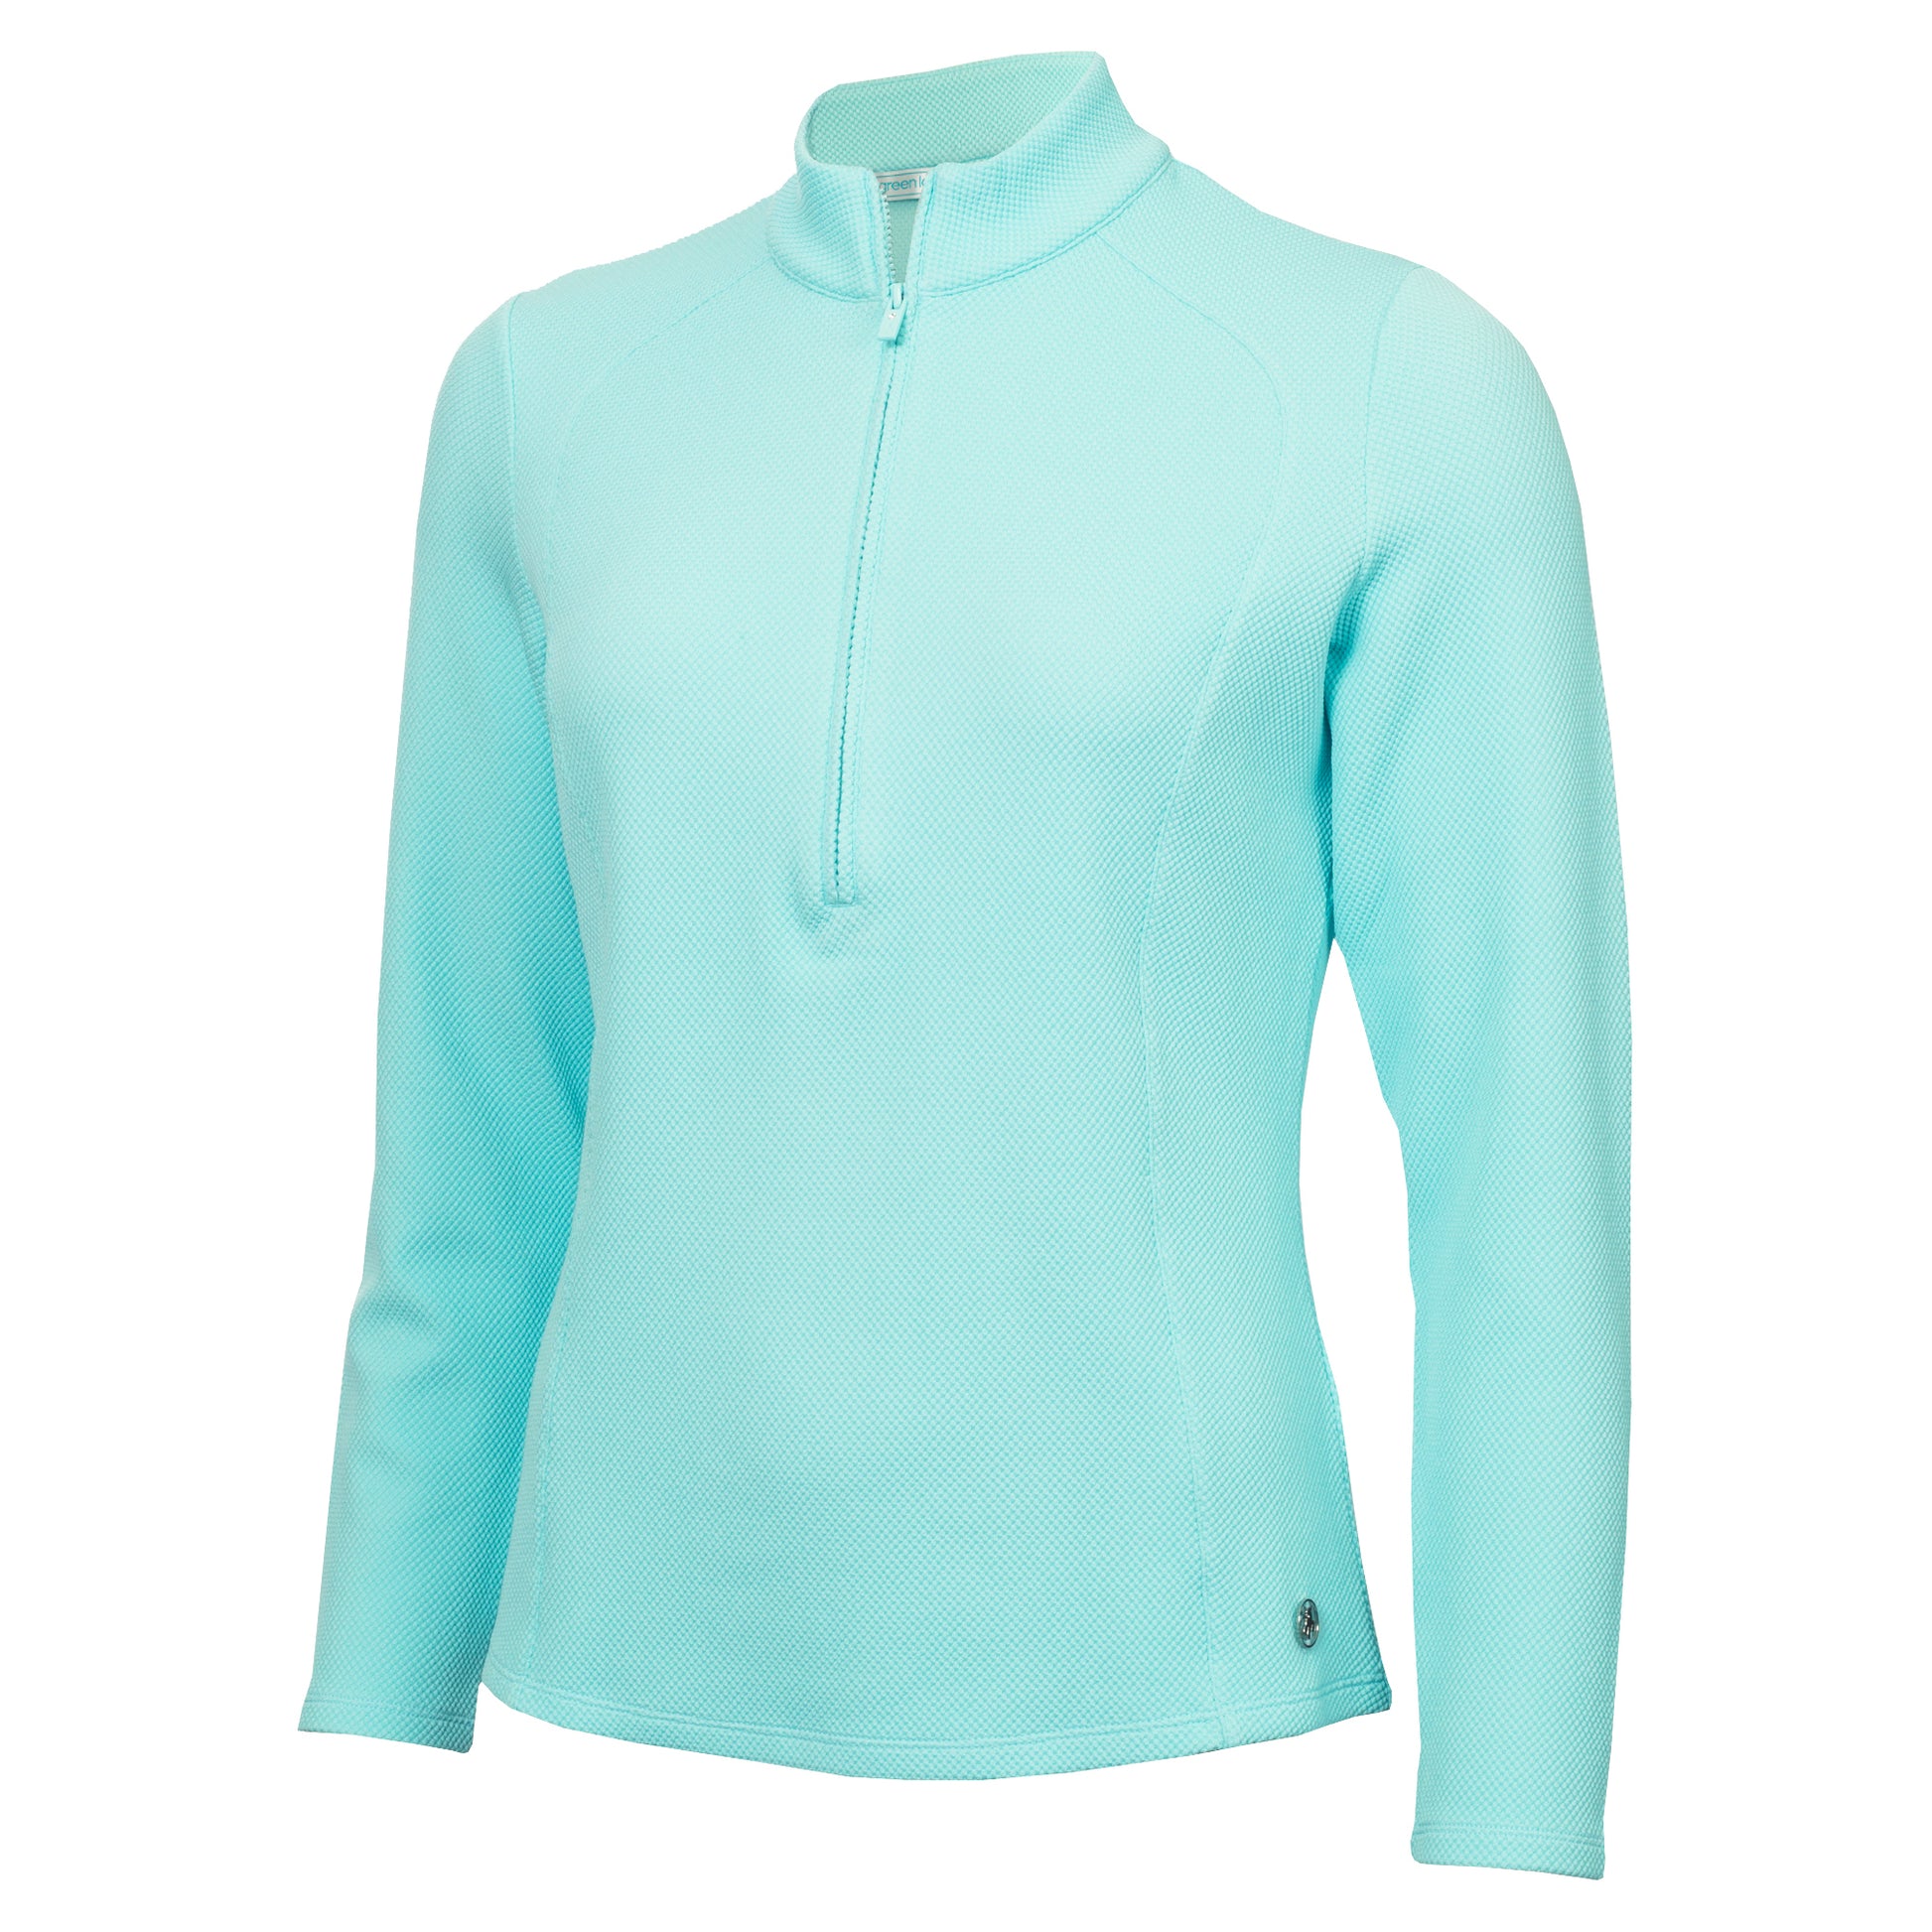 Green Lamb Women's Zip-Neck Golf Top in Aqua Blue with Waffle Design